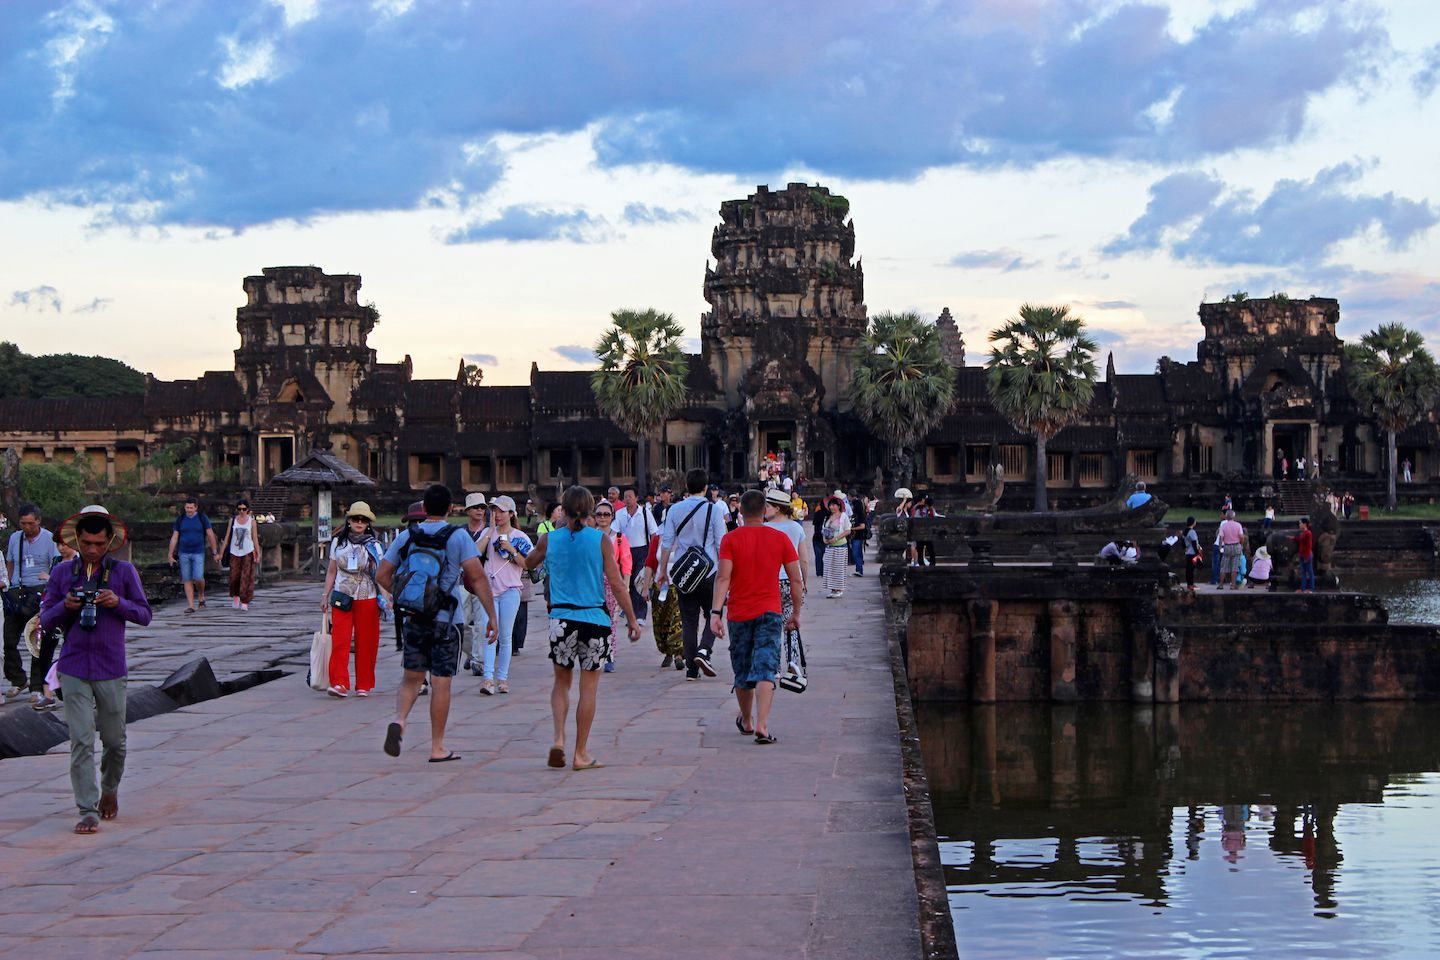 Bridge over the moat of Angkor Wat